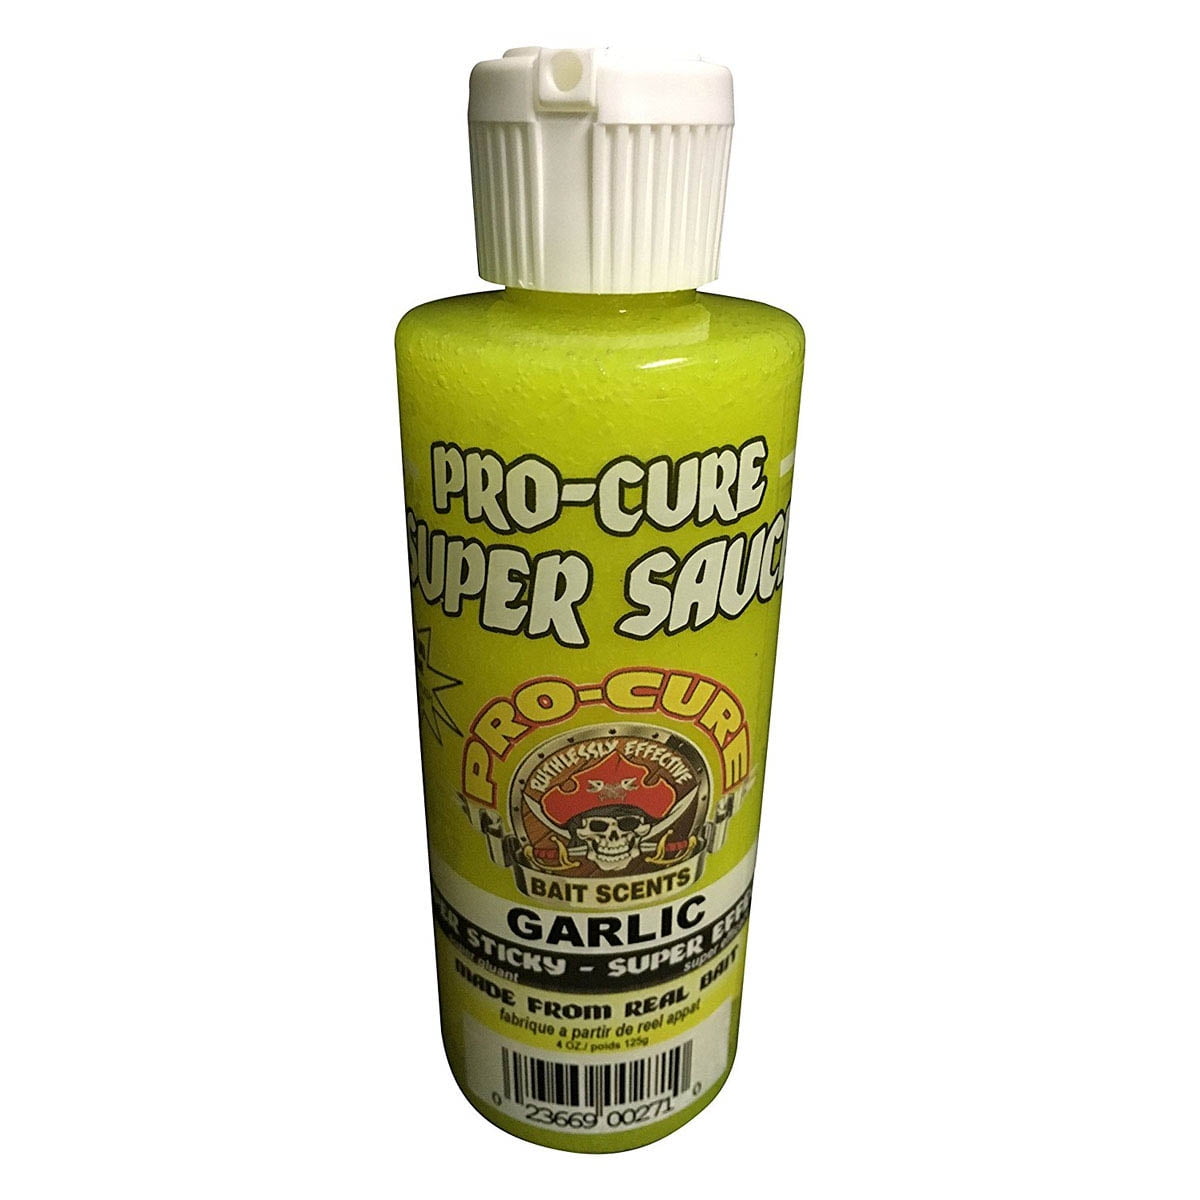 Pro Cure Garlic Super Sauce 4 oz